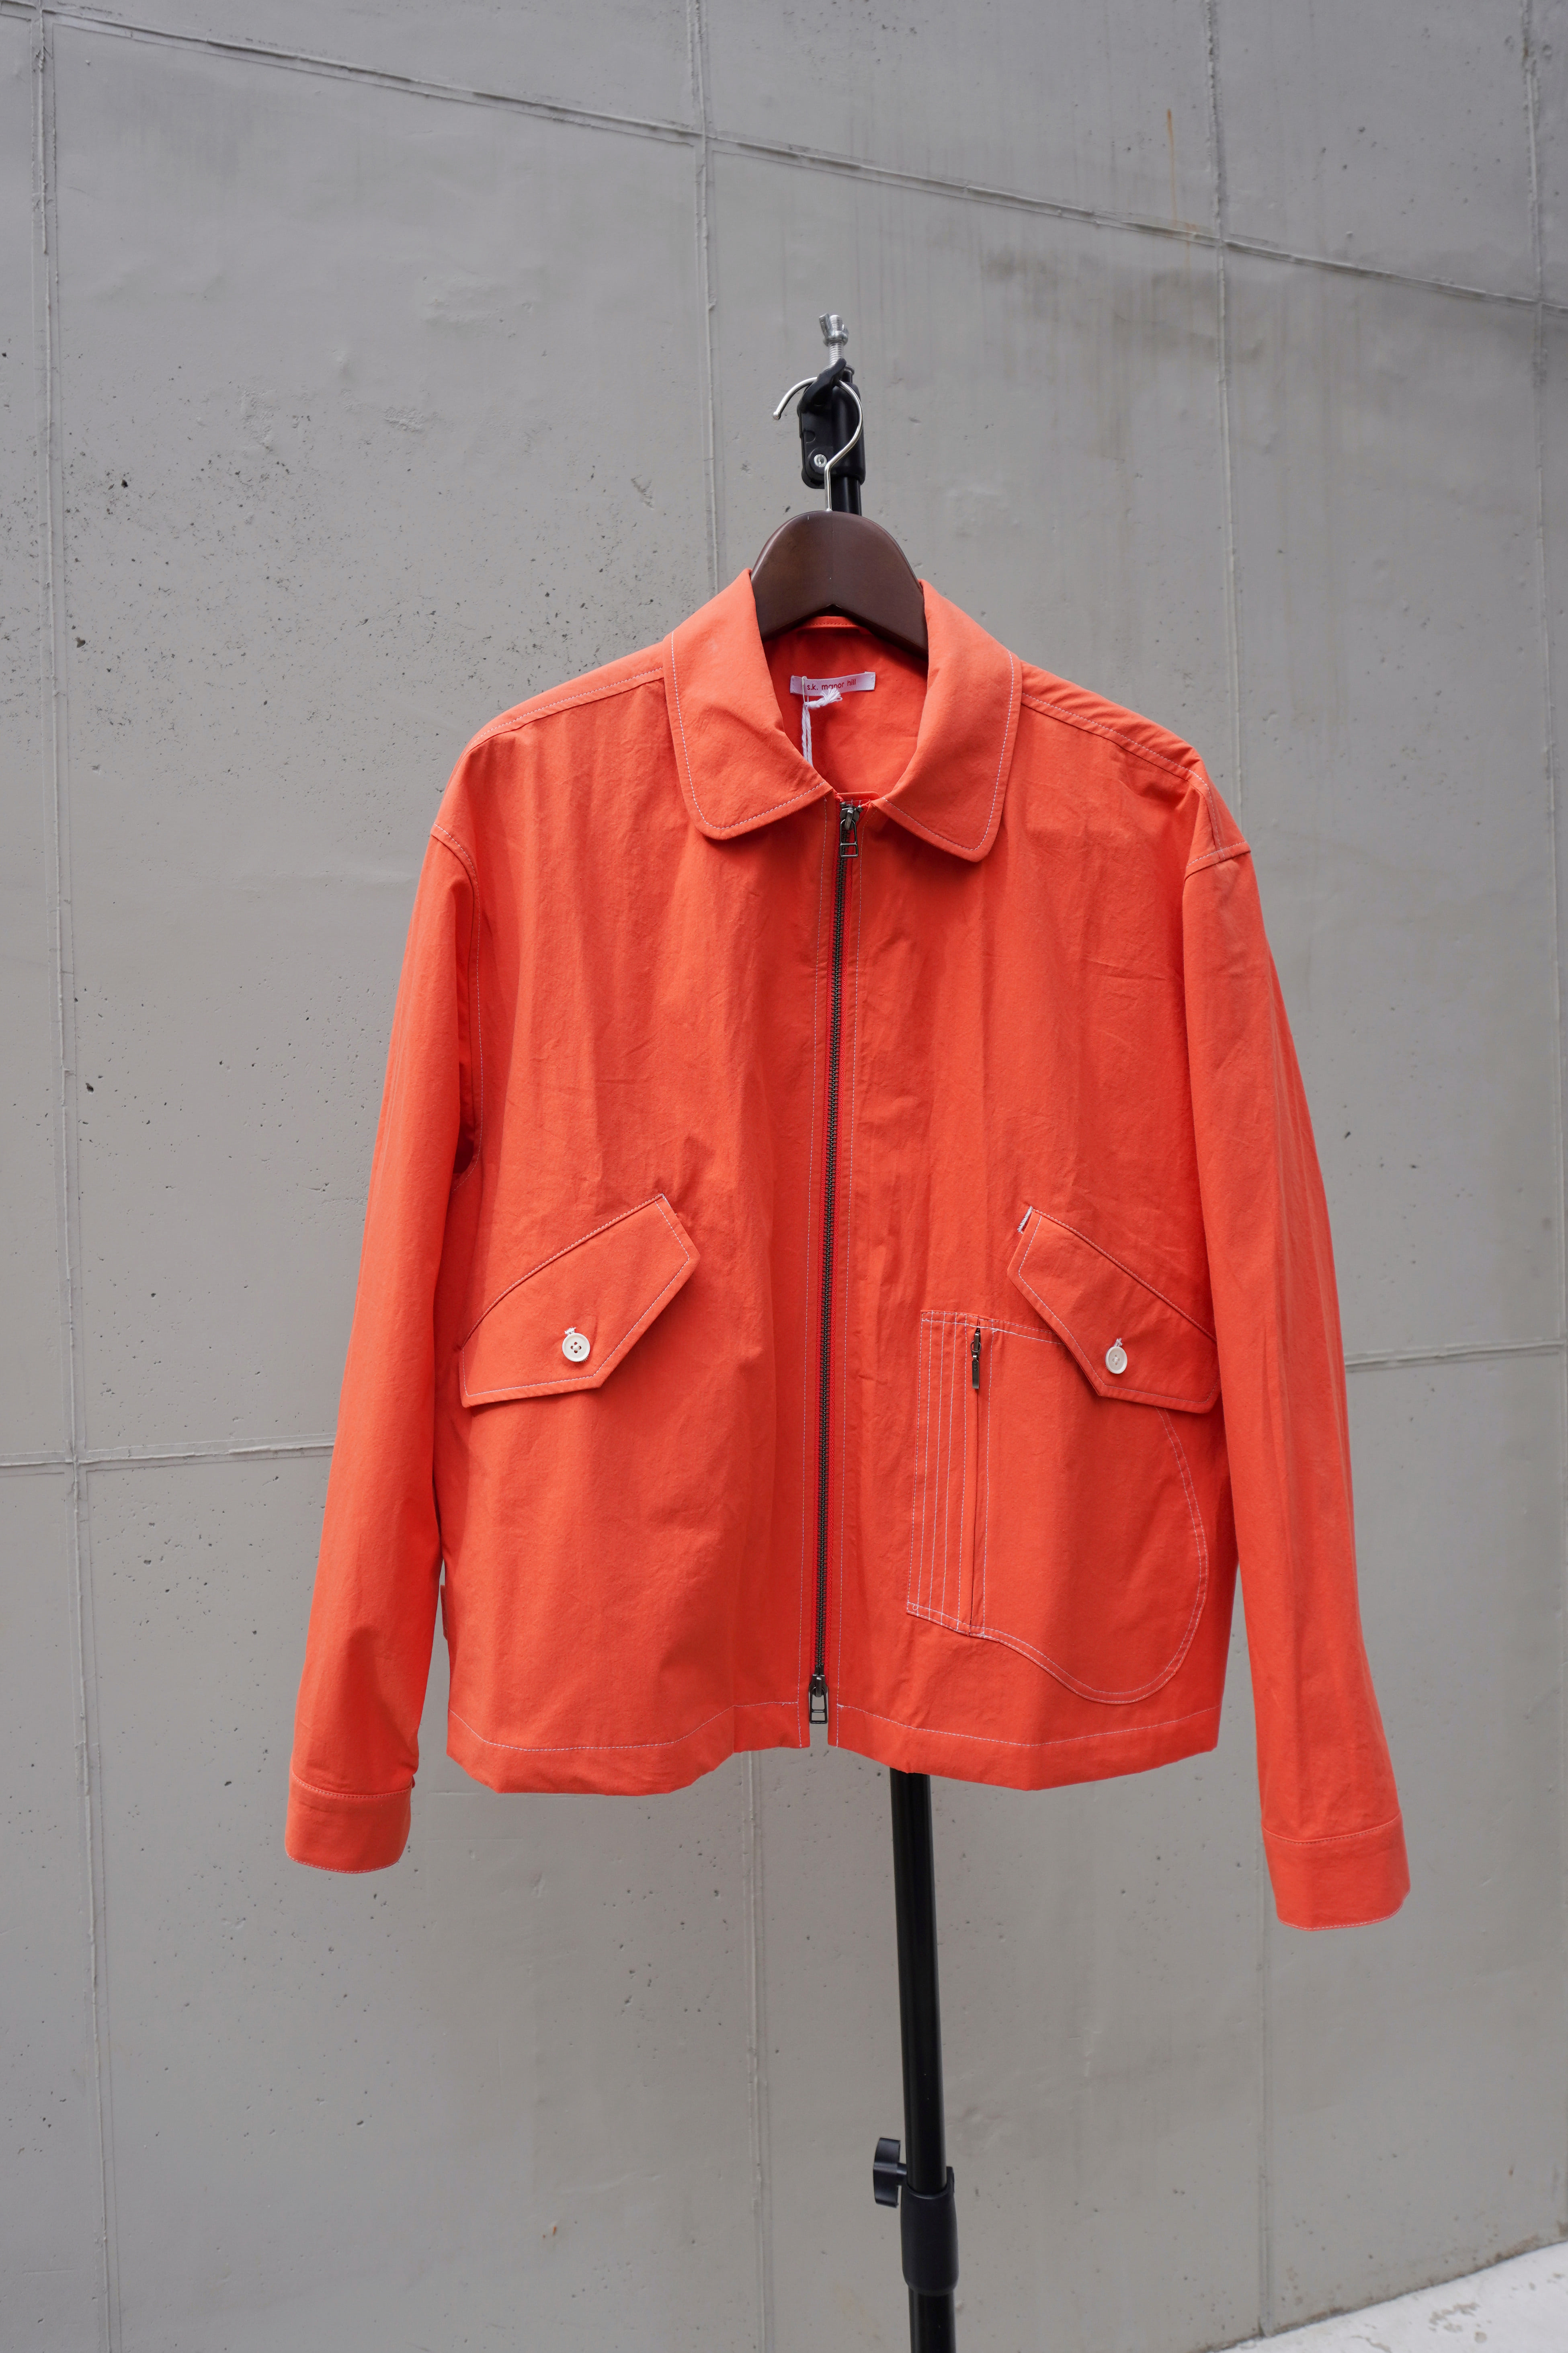 [S.K. MANOR HILL] Range Jacket - Orange Cotton